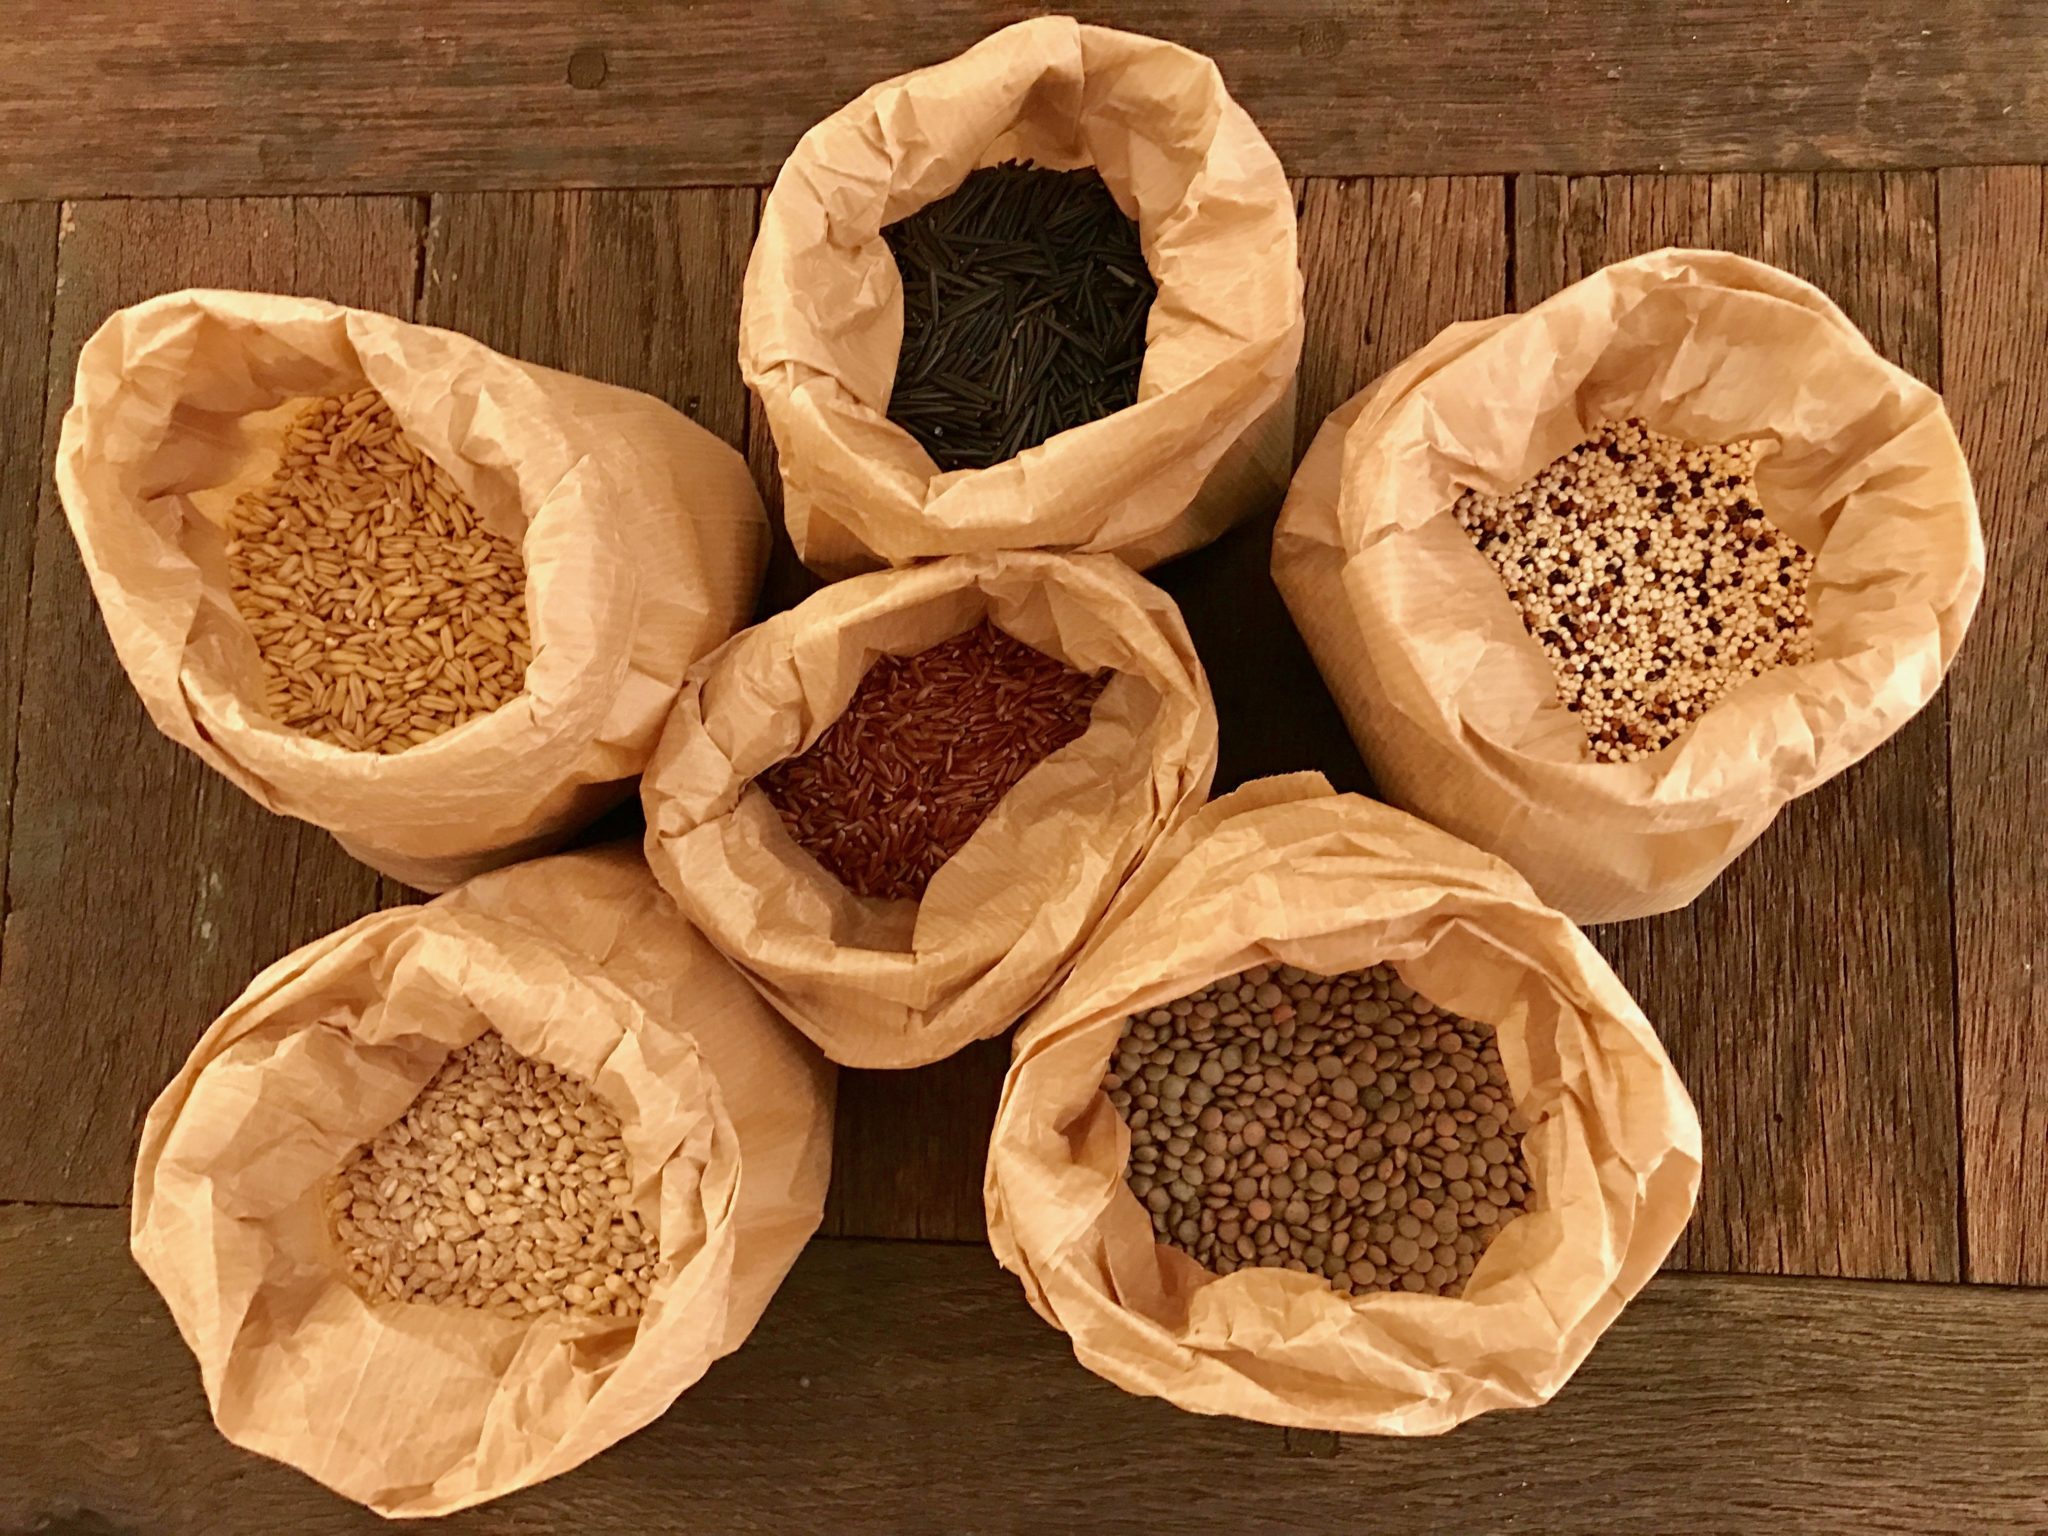 http://gourmetvegetariankitchen.com/wp-content/uploads/2017/01/dried-whole-grains.jpg